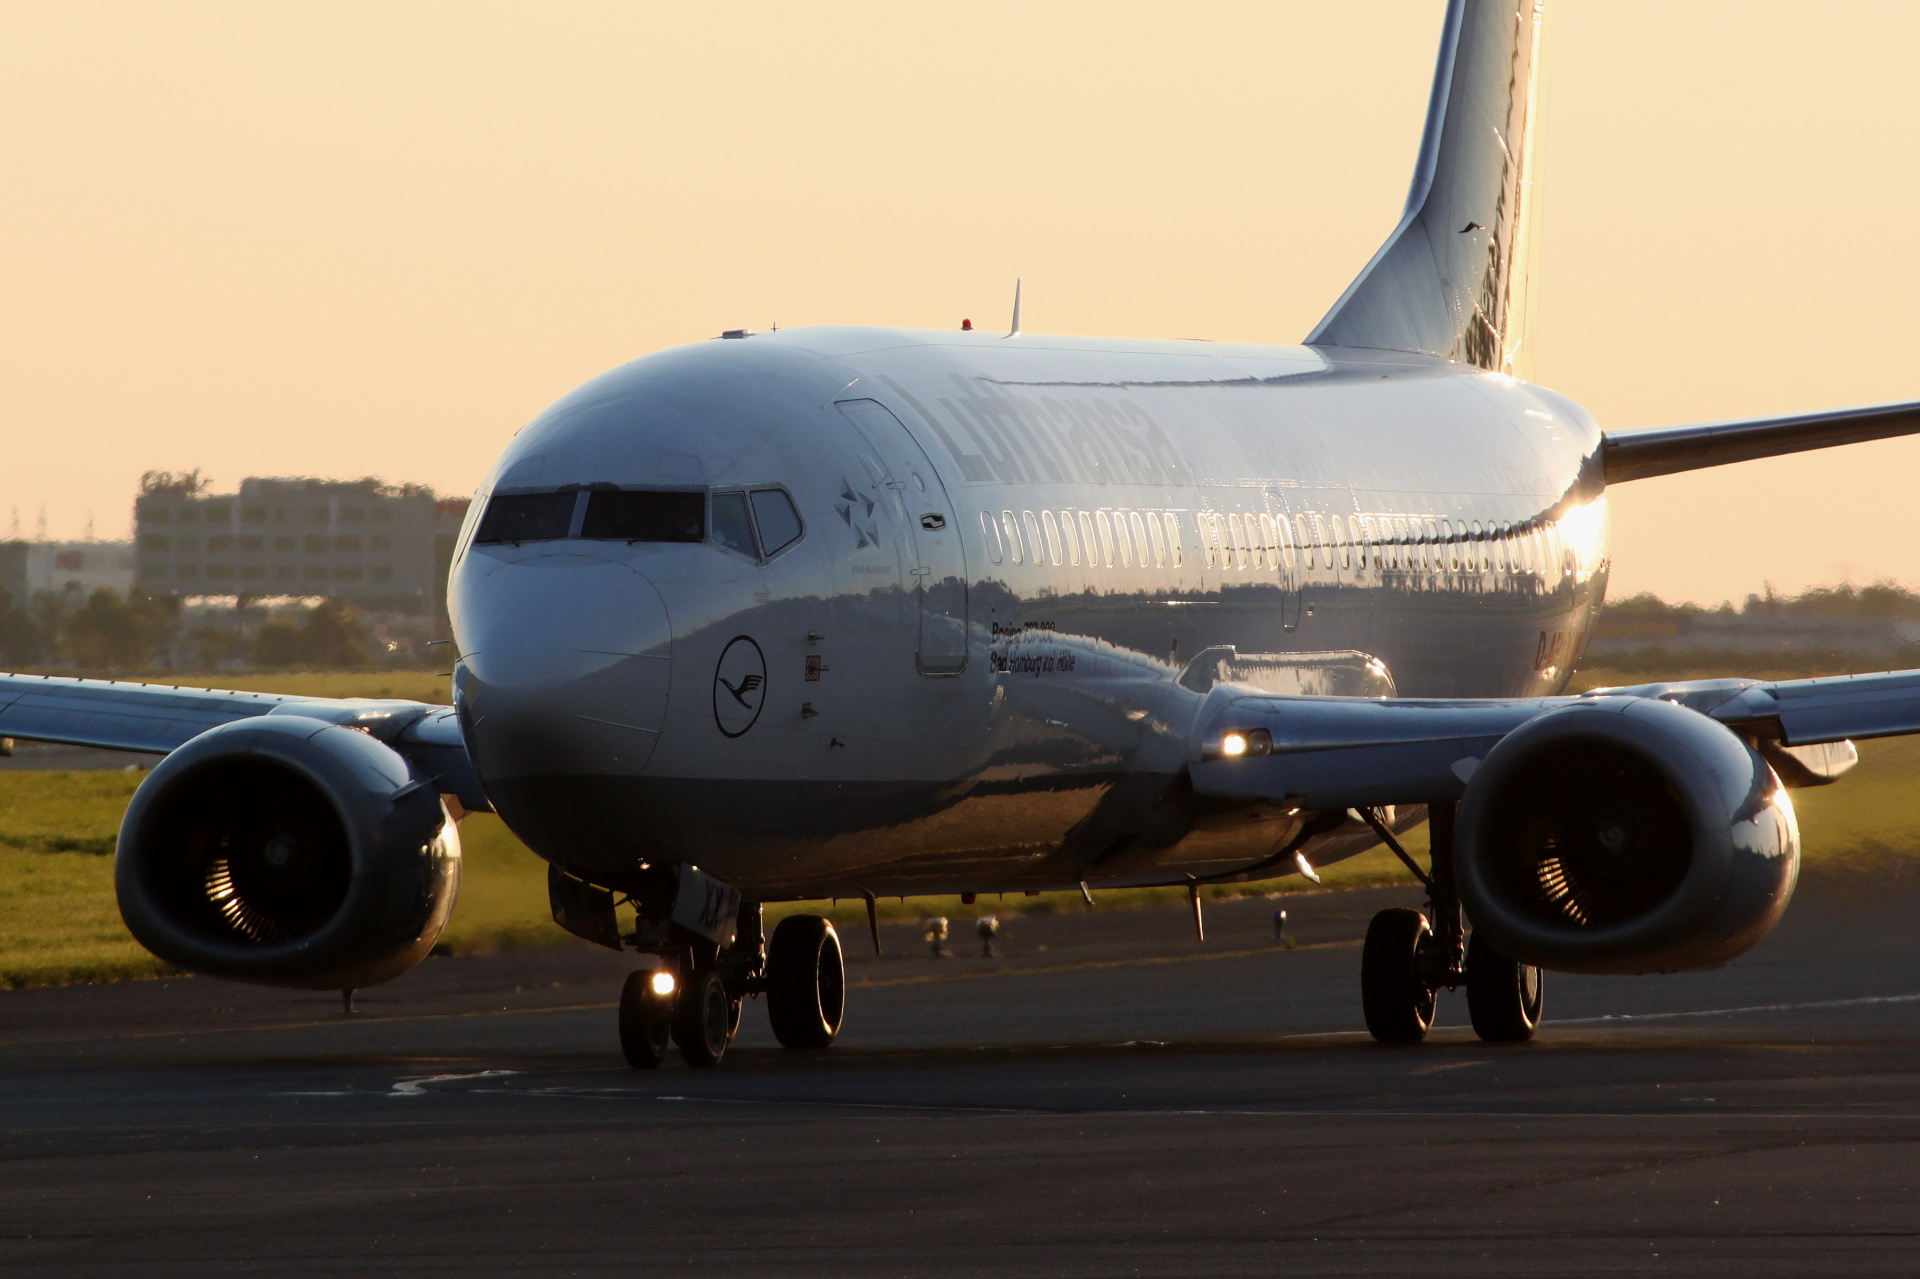 D-ABXX (Aircraft » EPWA Spotting » Boeing 737-300 » Lufthansa)